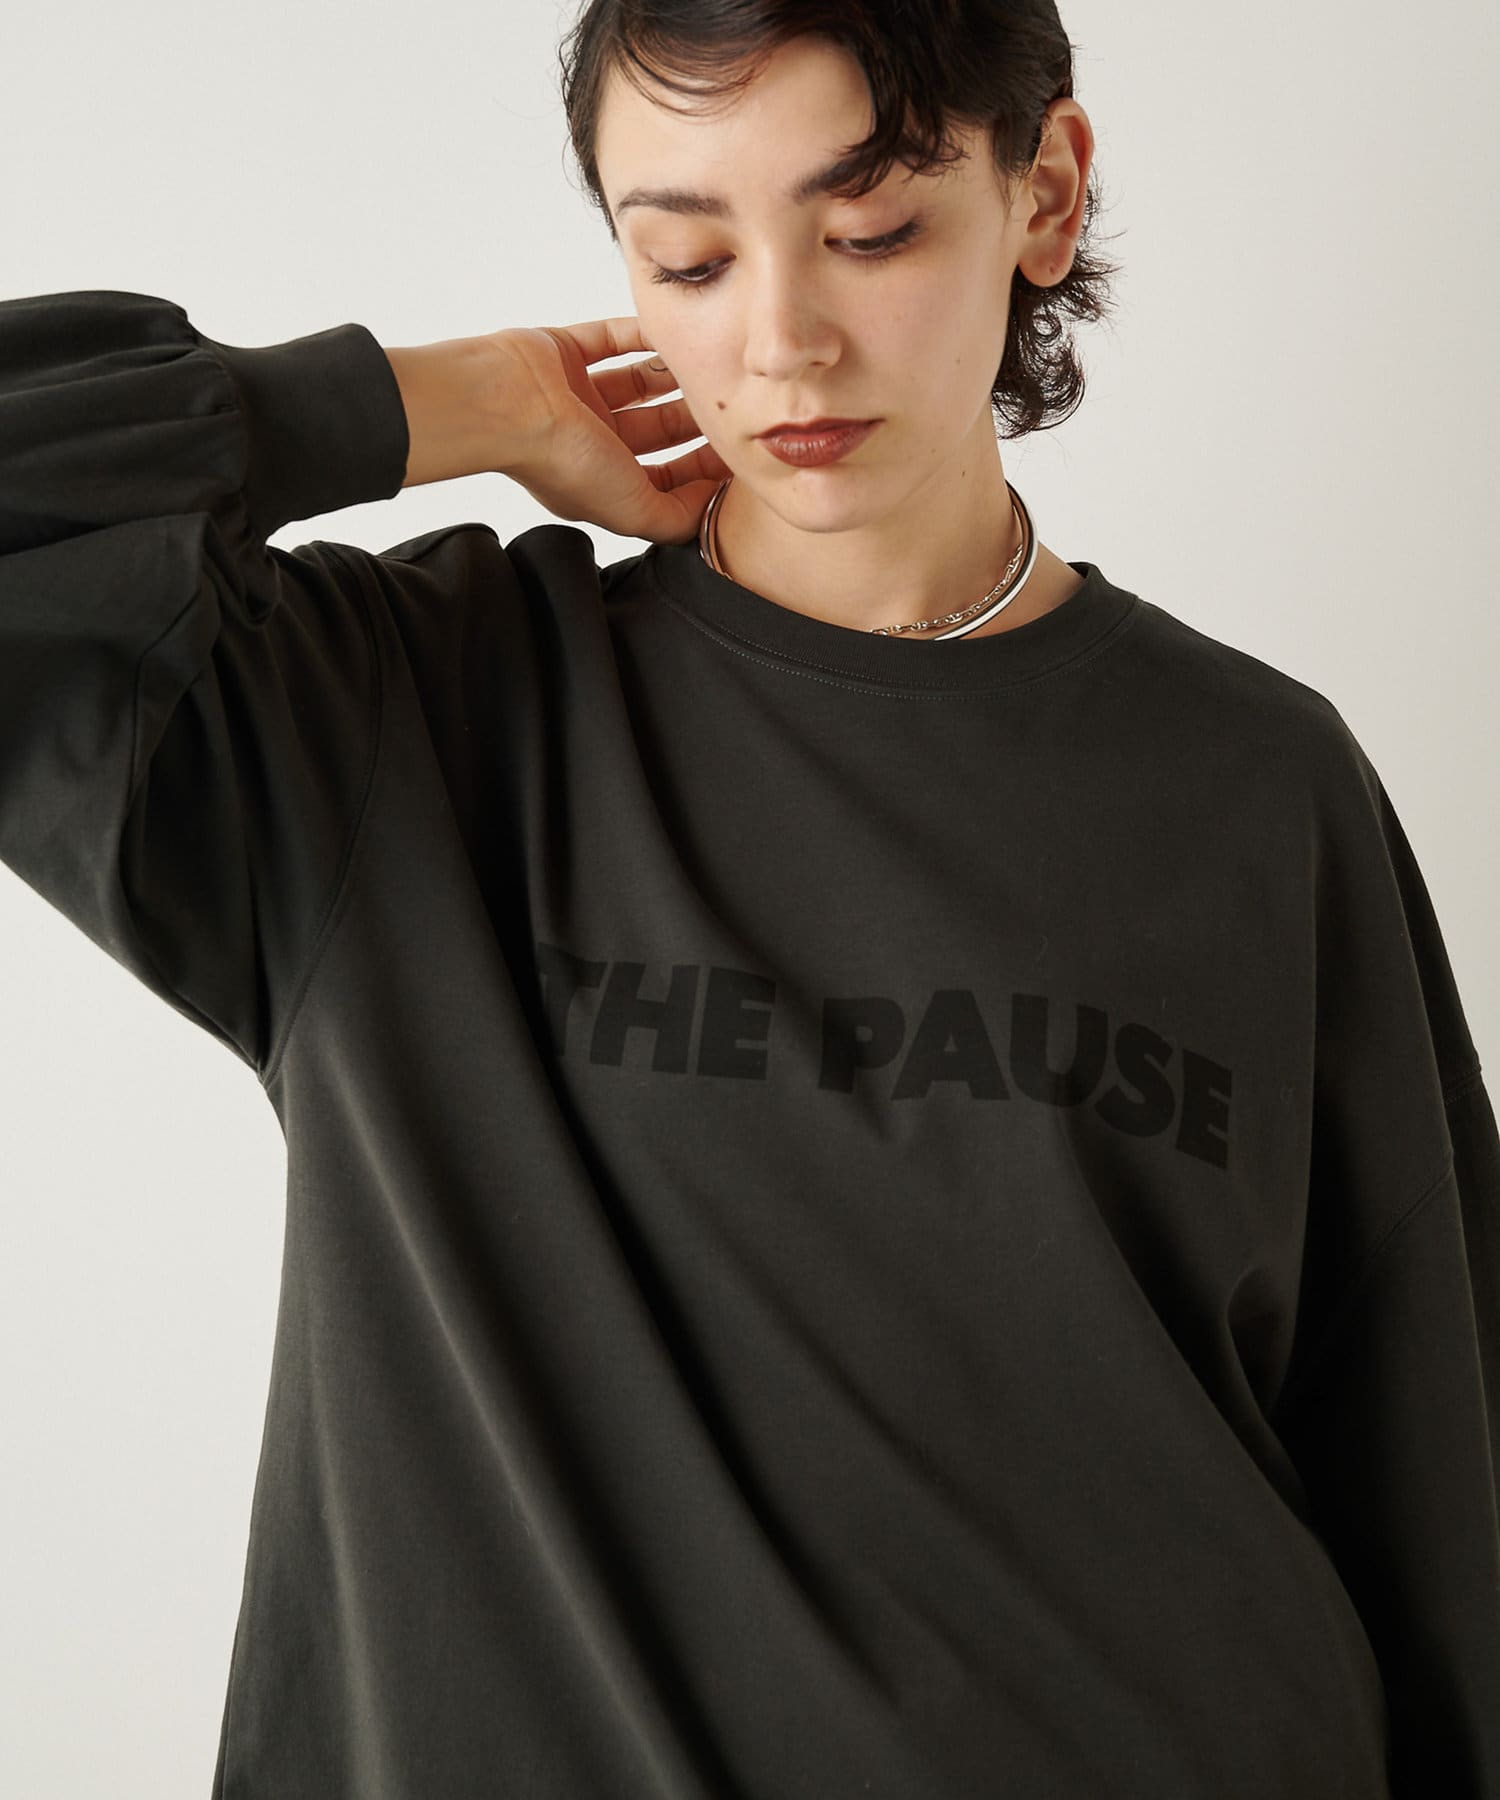 THE PAUSE】THE PAUSEロングスリーブTシャツ | Whim Gazette(ウィム